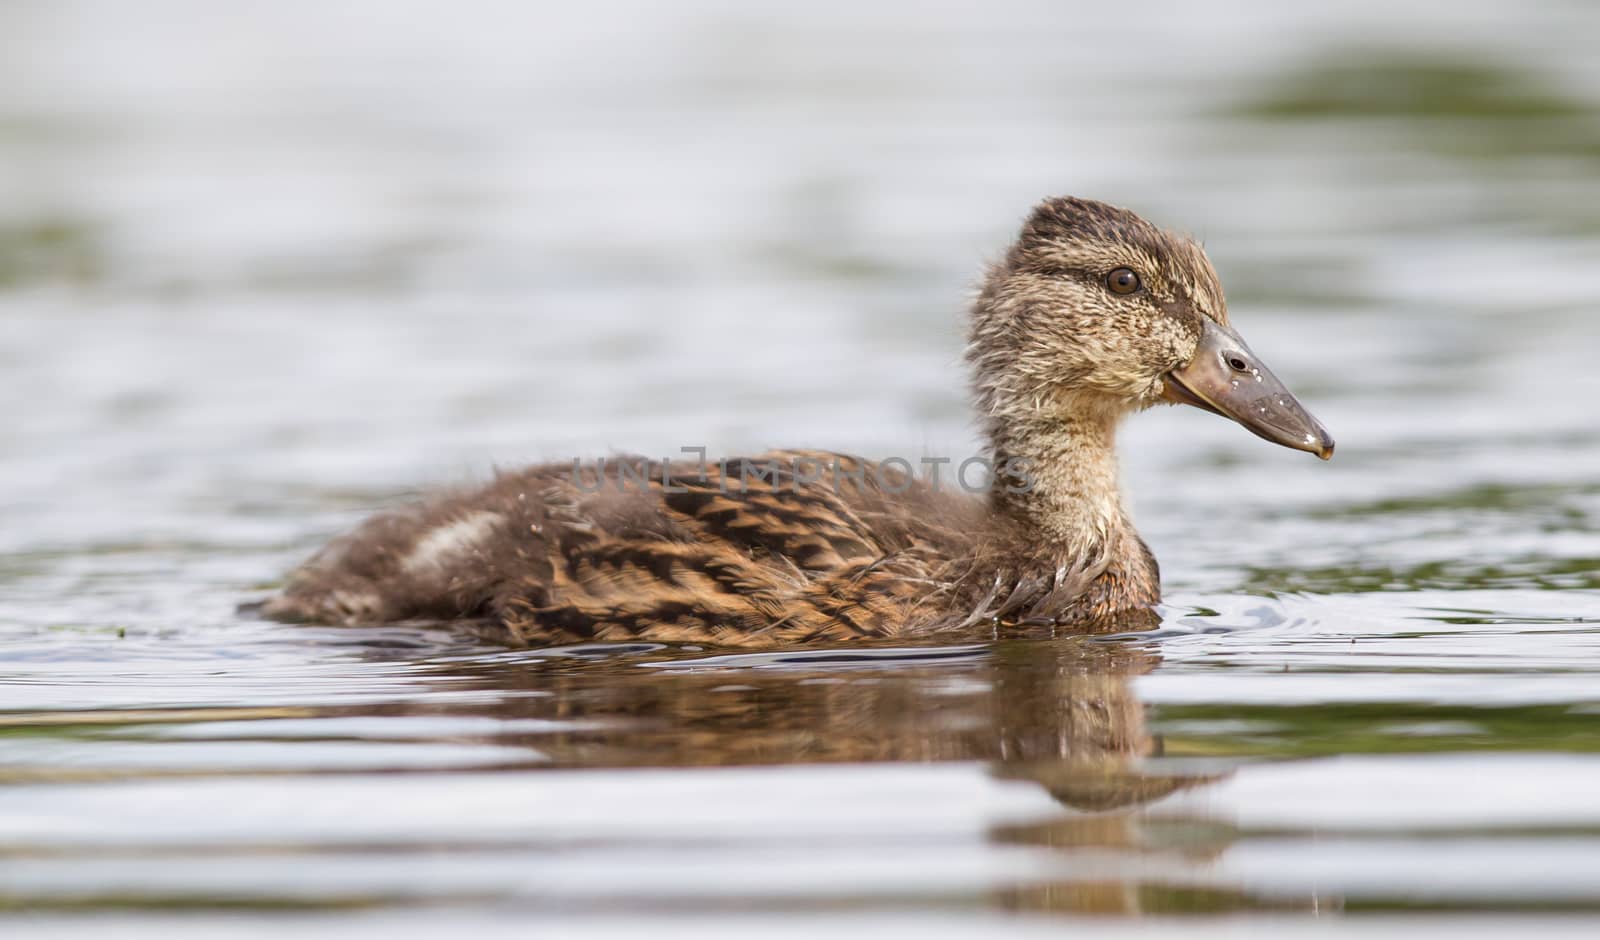 Young mallard duck, juvenile by michaklootwijk